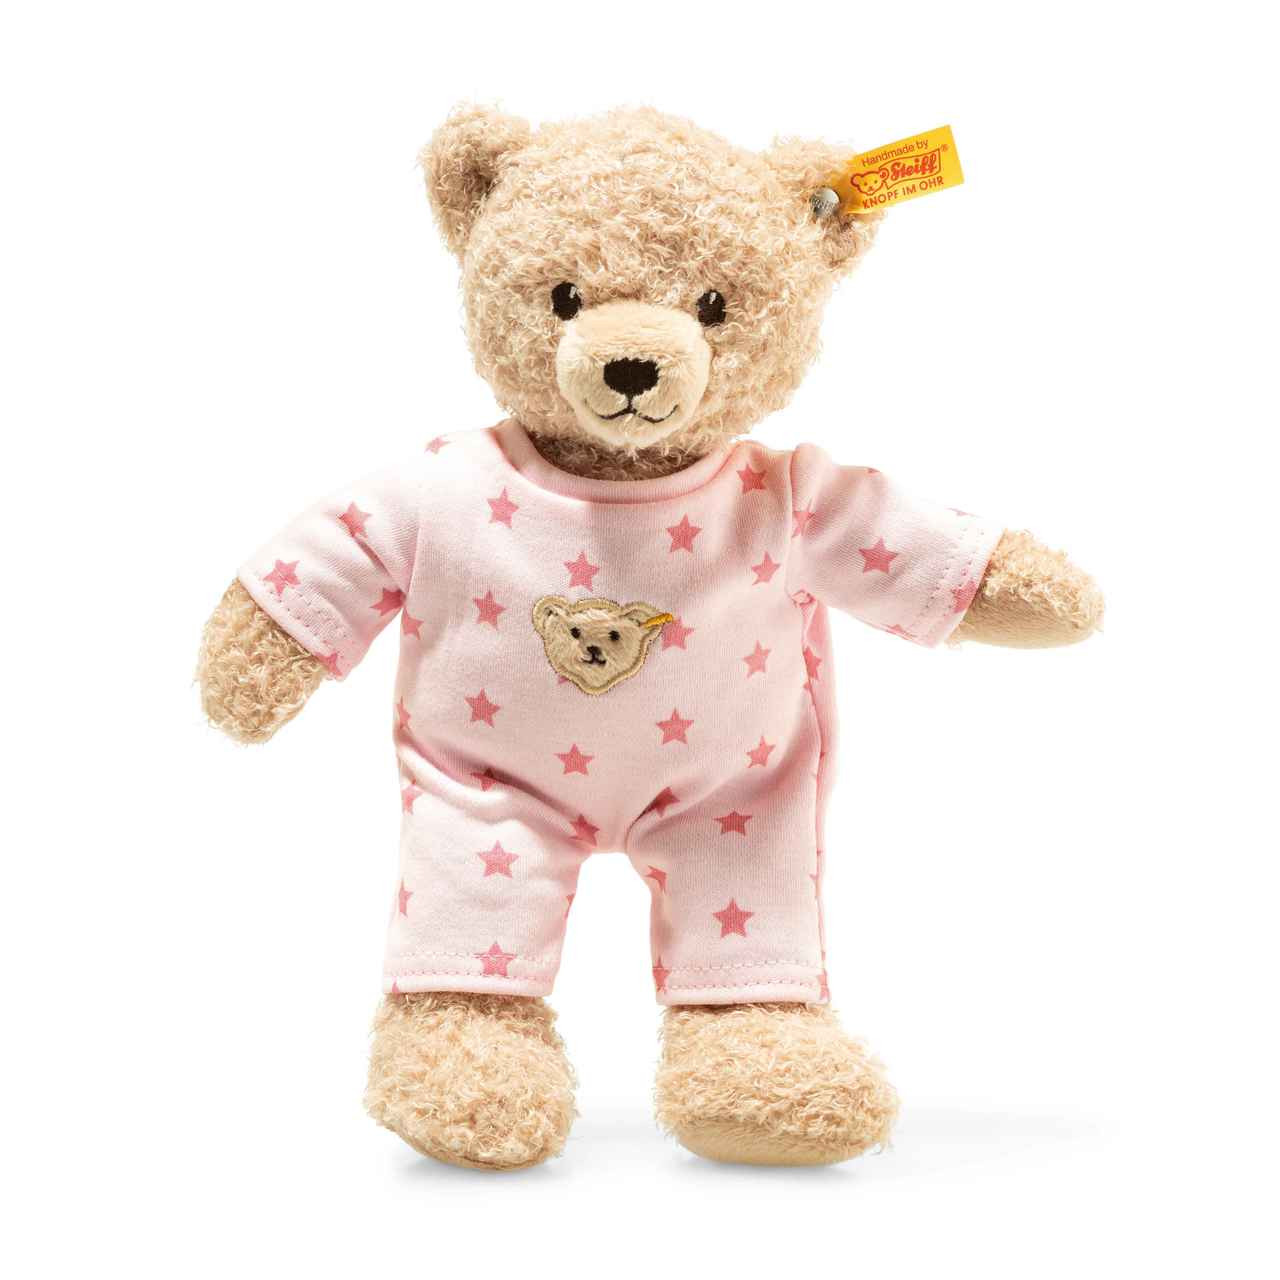 affordable teddy bears